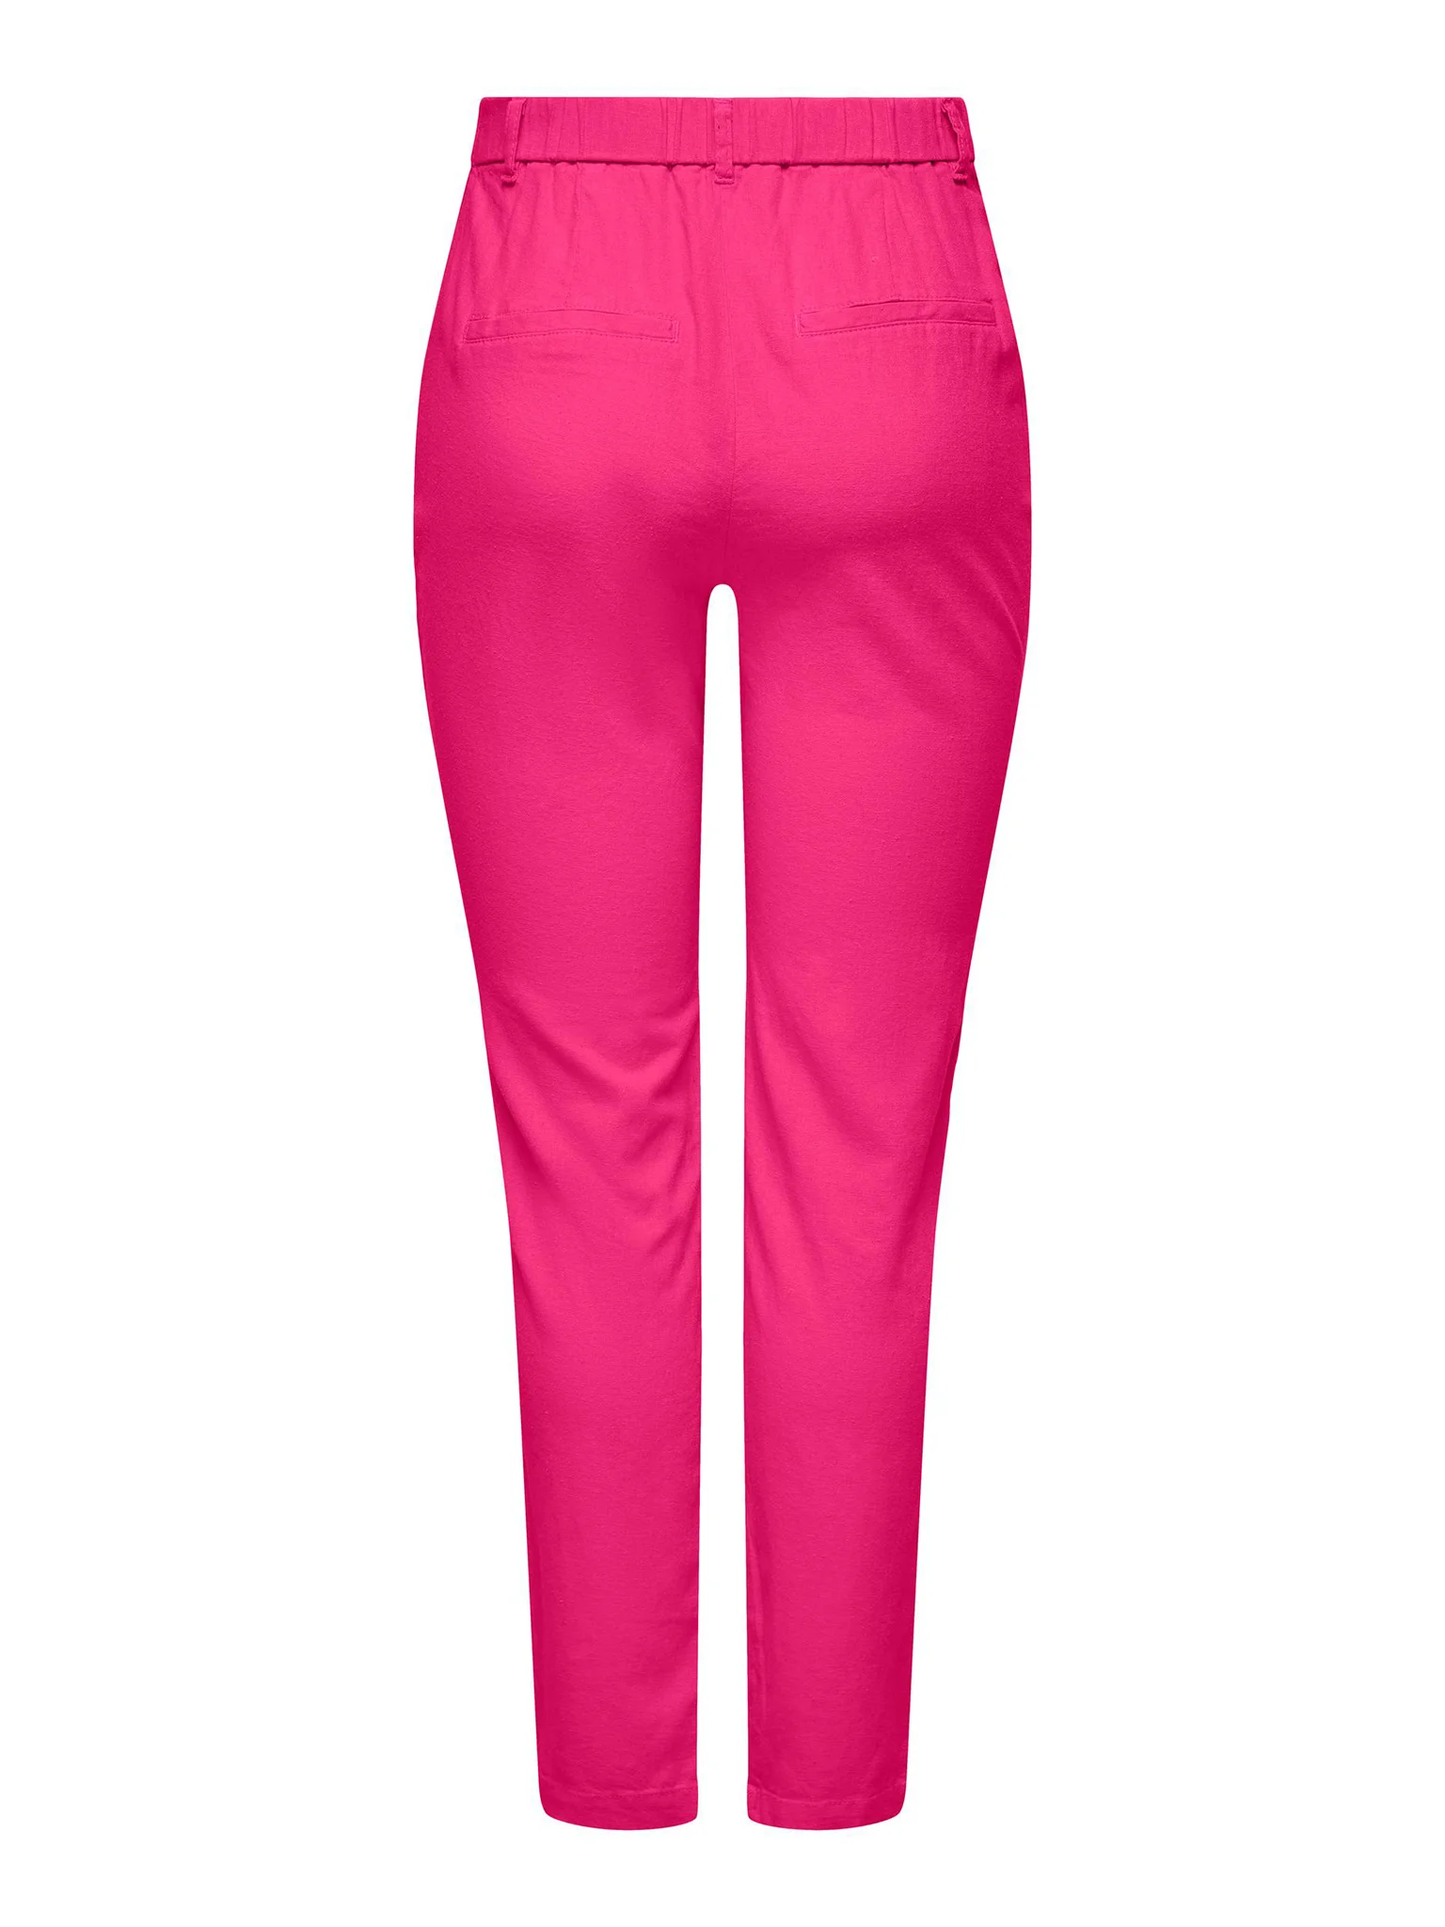 Women's ONLY pink linen cigarette pants